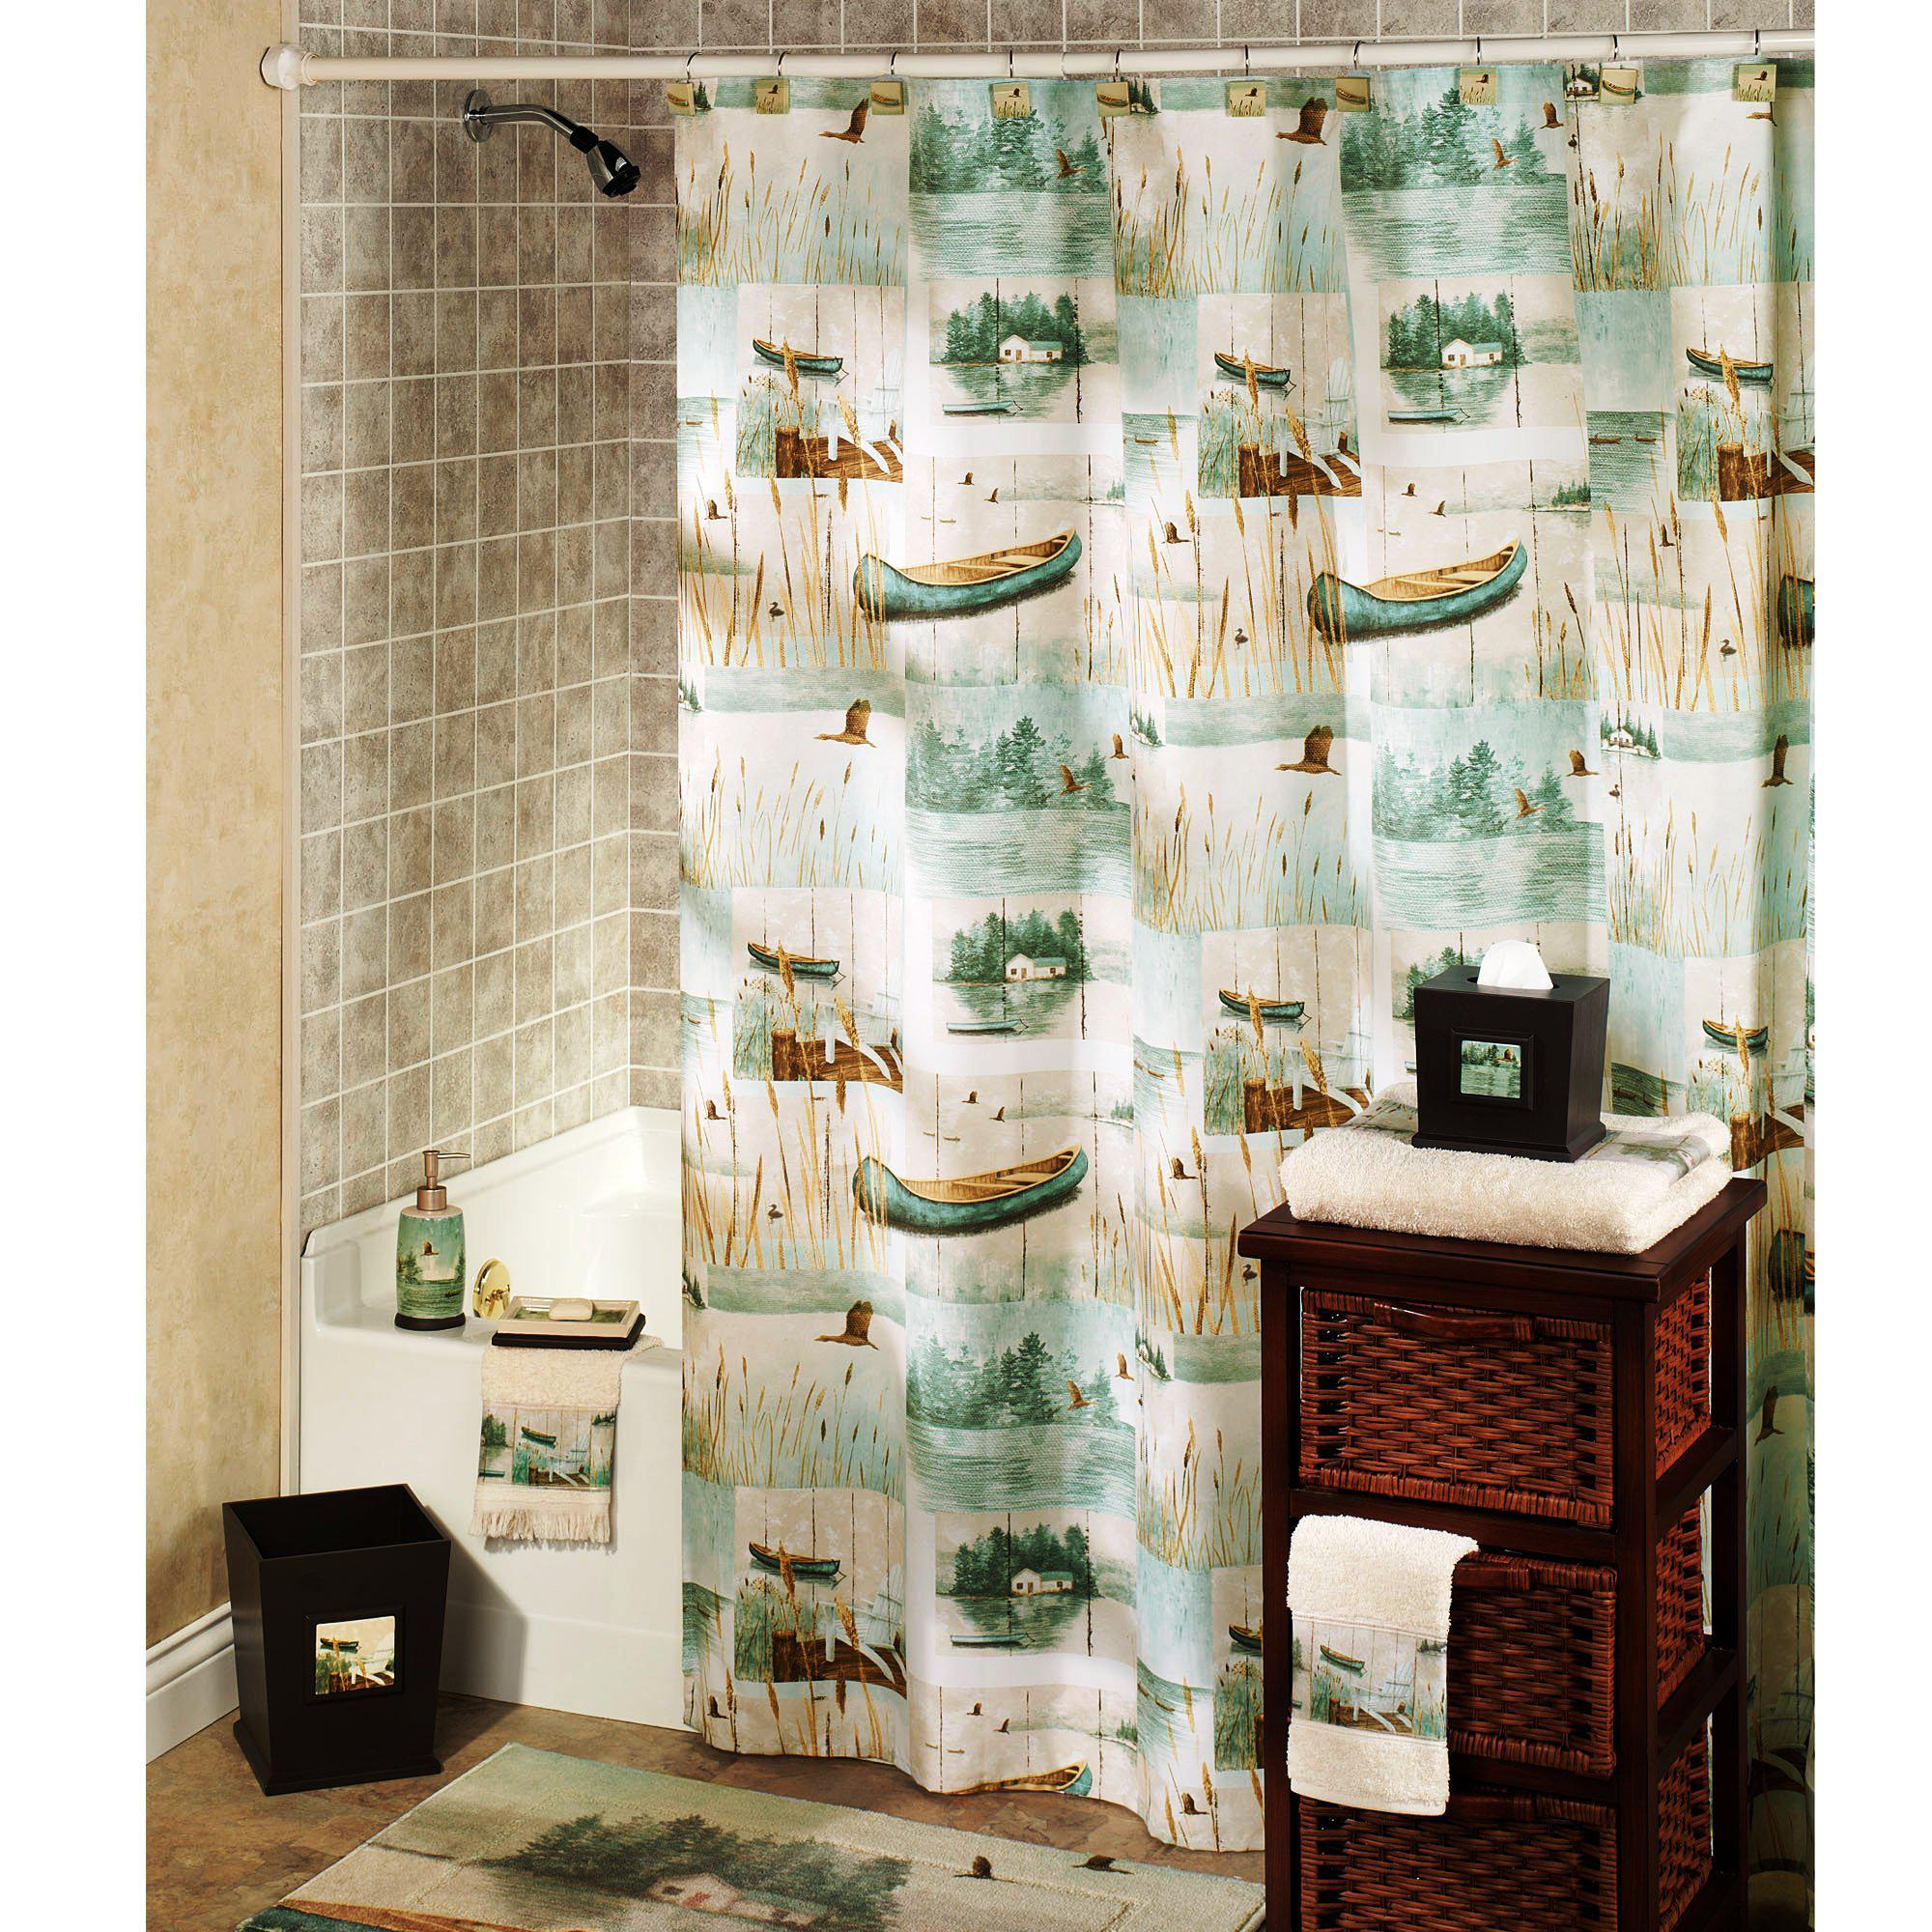 Bojoyo Sunflower Shower Curtain Hooks Rings Farmhouse Rustic Country Bathroom Fall Vintage Home Bath Decor Accessories